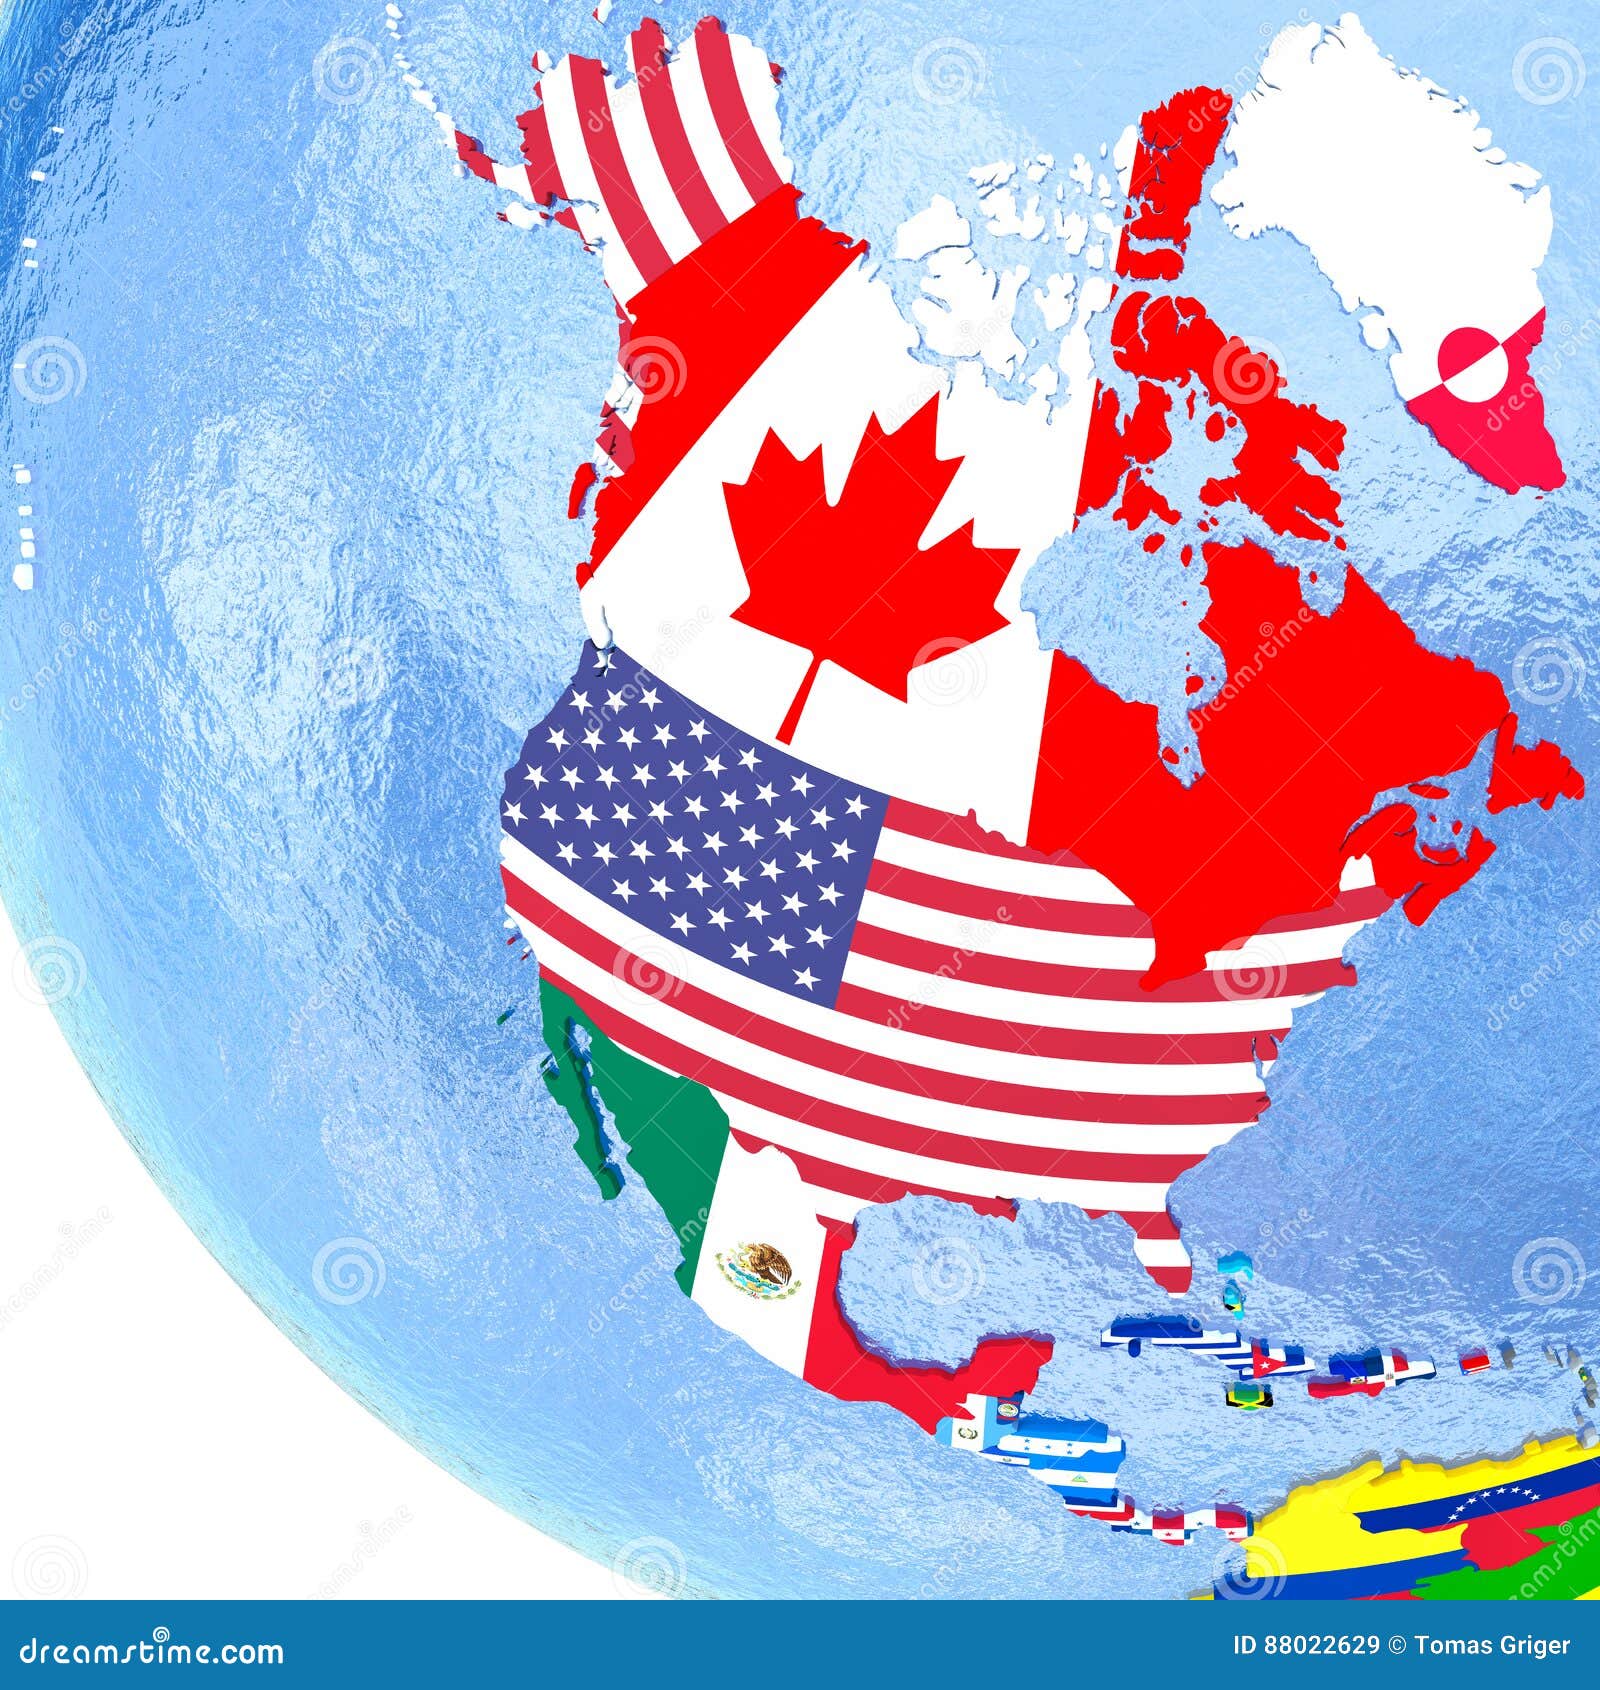 Noord-Amerika op politieke bol met vlaggen. Noord-Amerika op politieke bol met nationale vlaggen ingebed in kaart 3D Illustratie